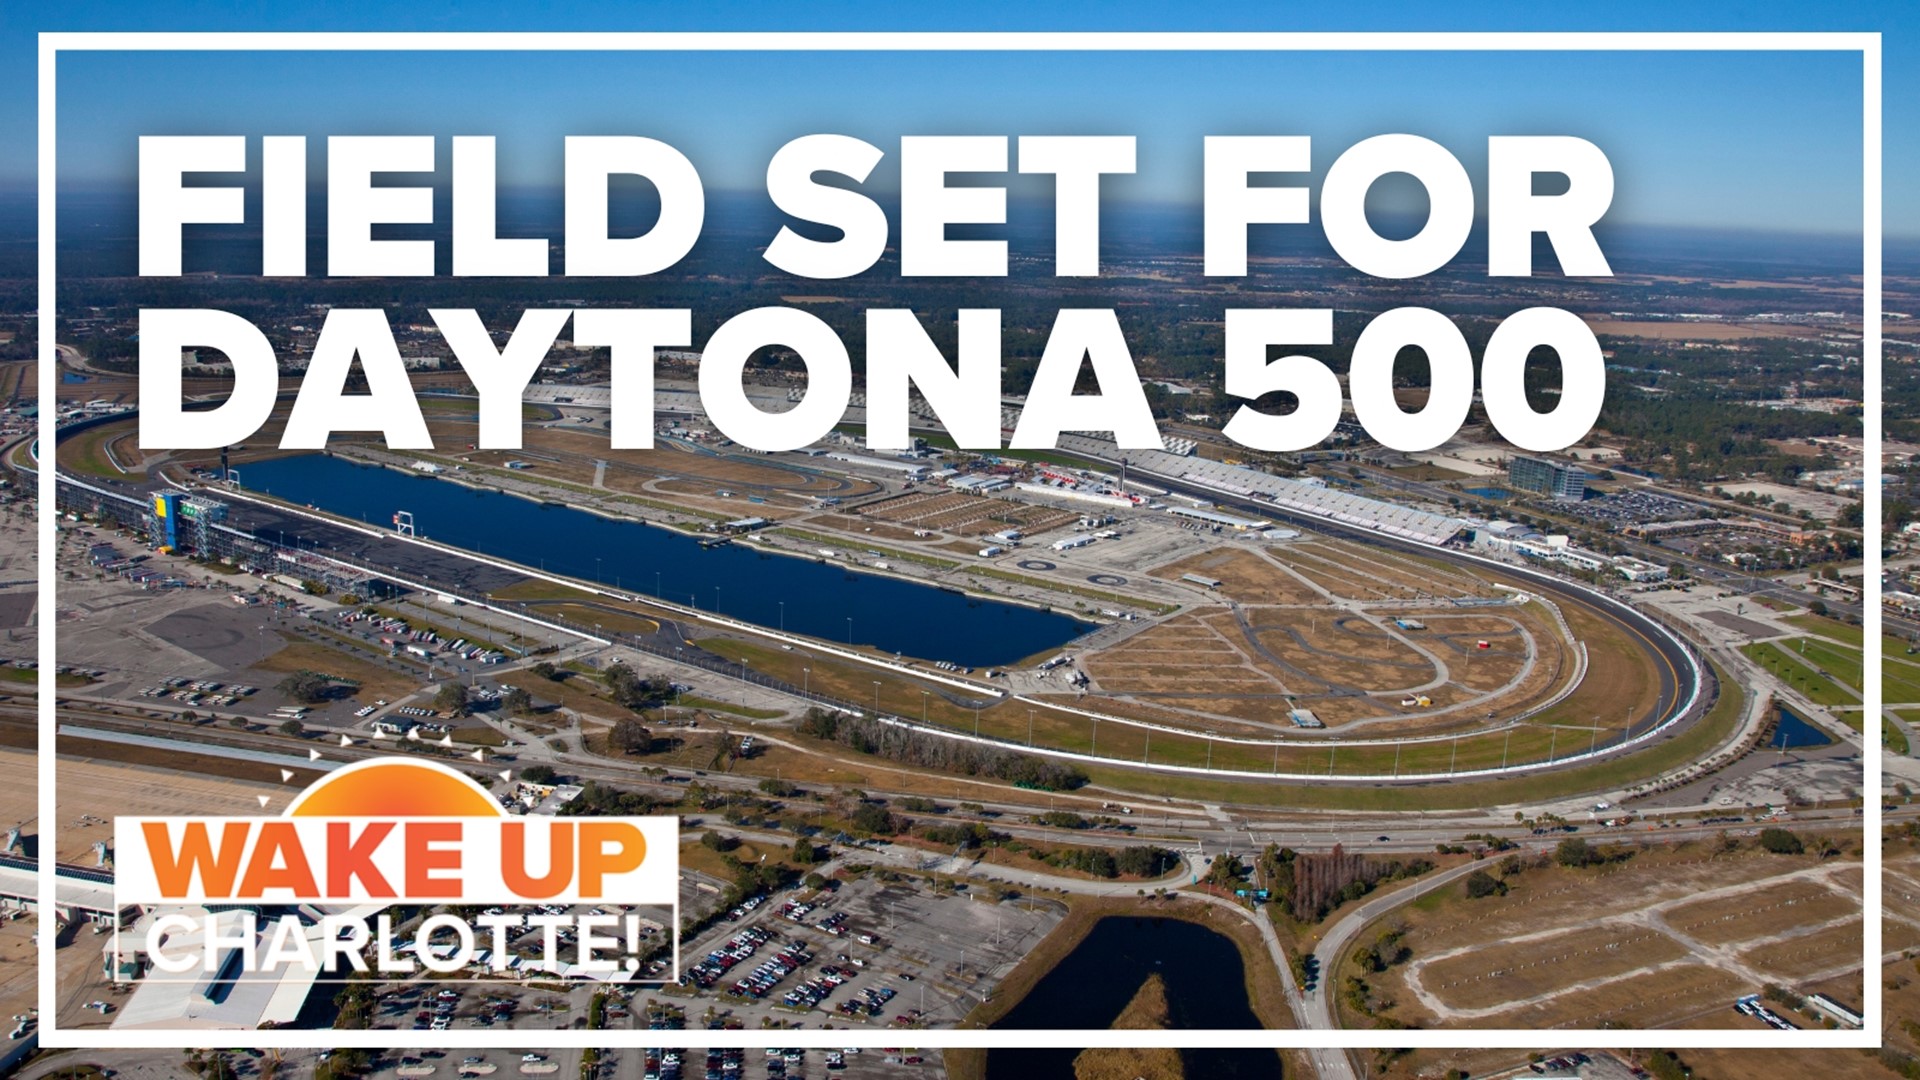 Logano, Almirola win duels; field set for Daytona 500 NASCAR wcnc